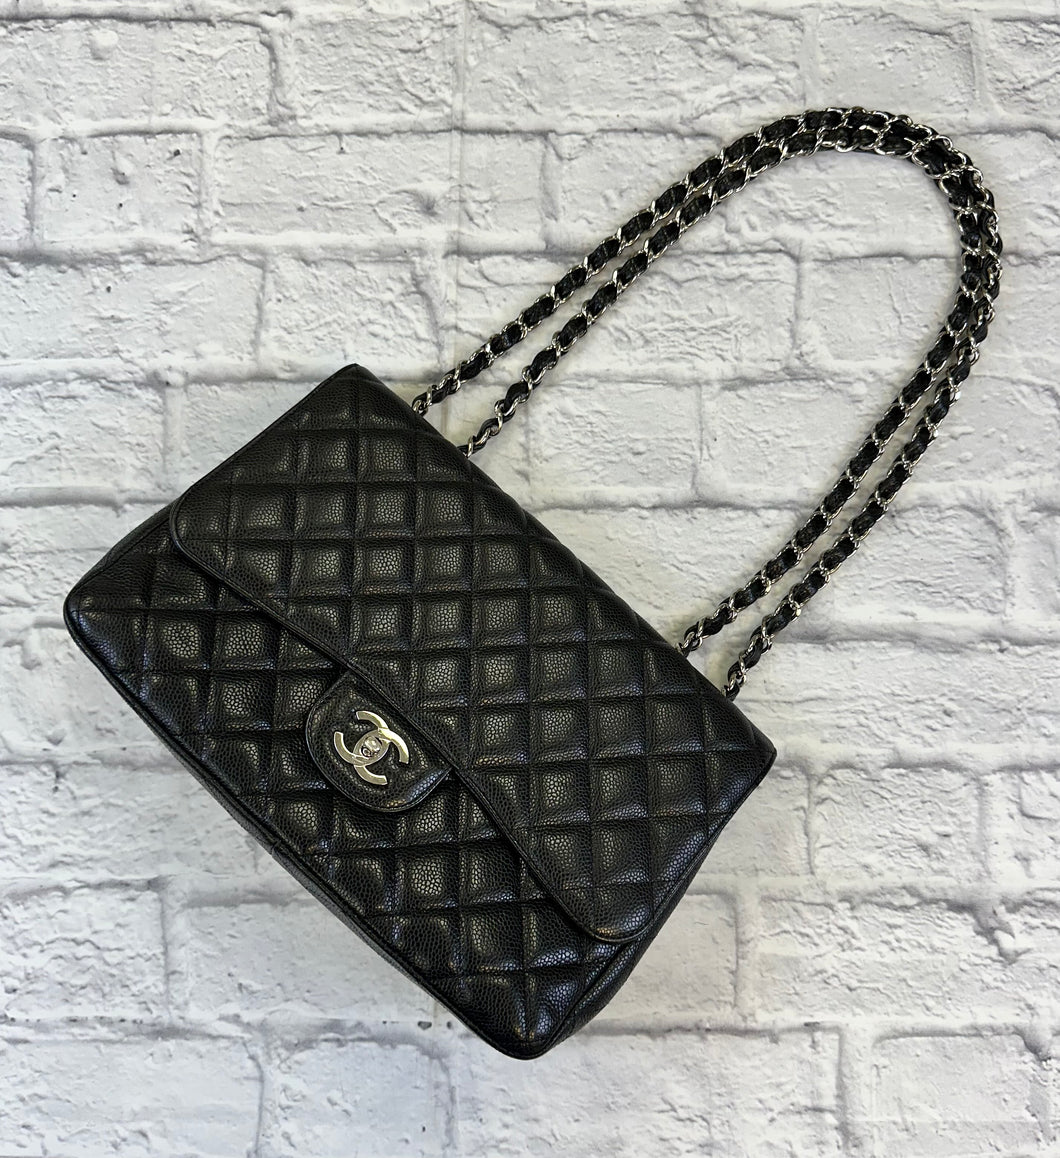 Chanel Black Caviar Jumbo Single Flap Bag